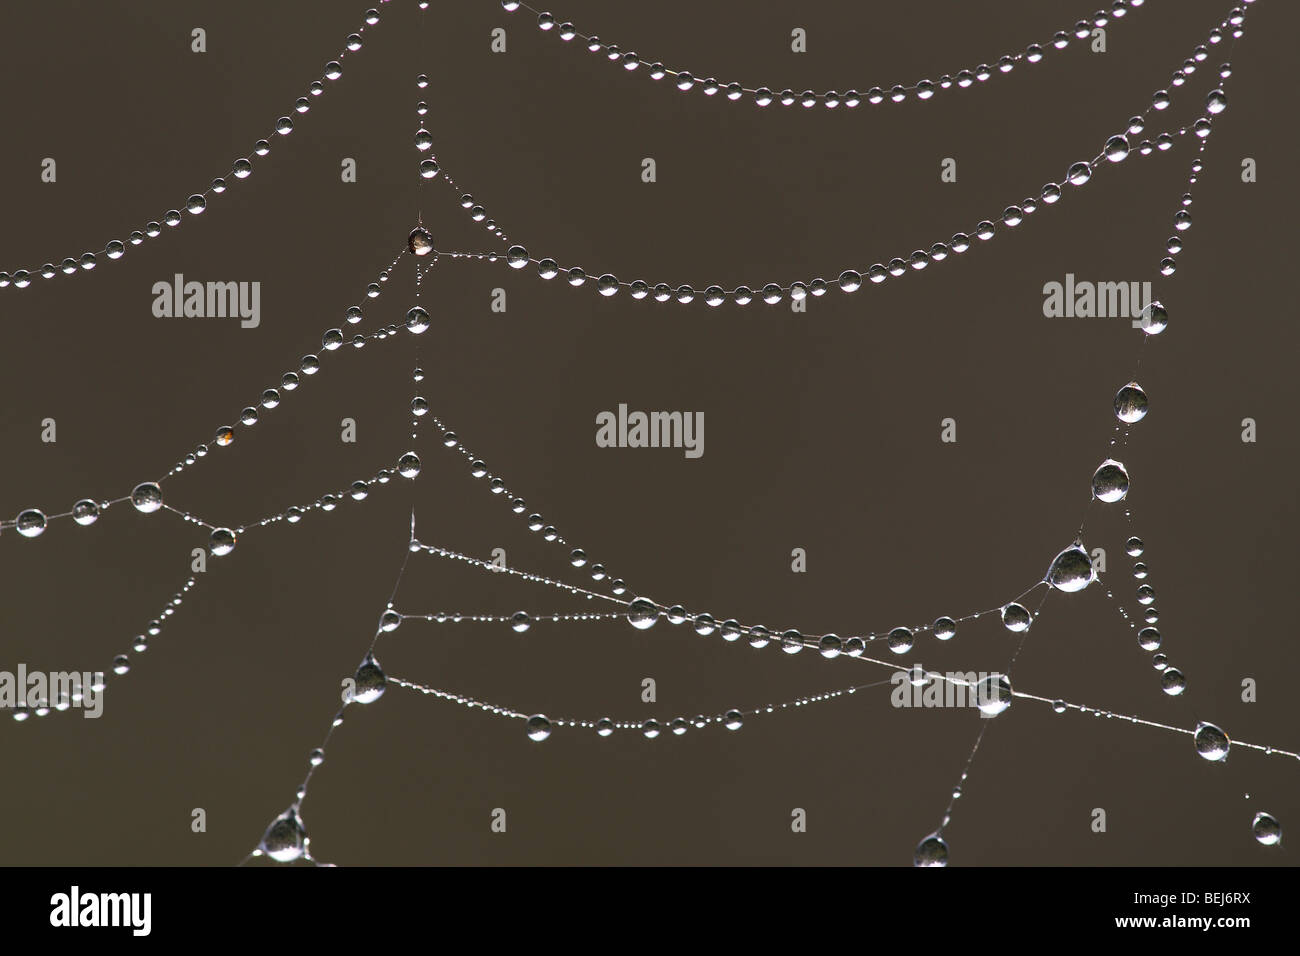 Dew droplets in spiderweb Stock Photo